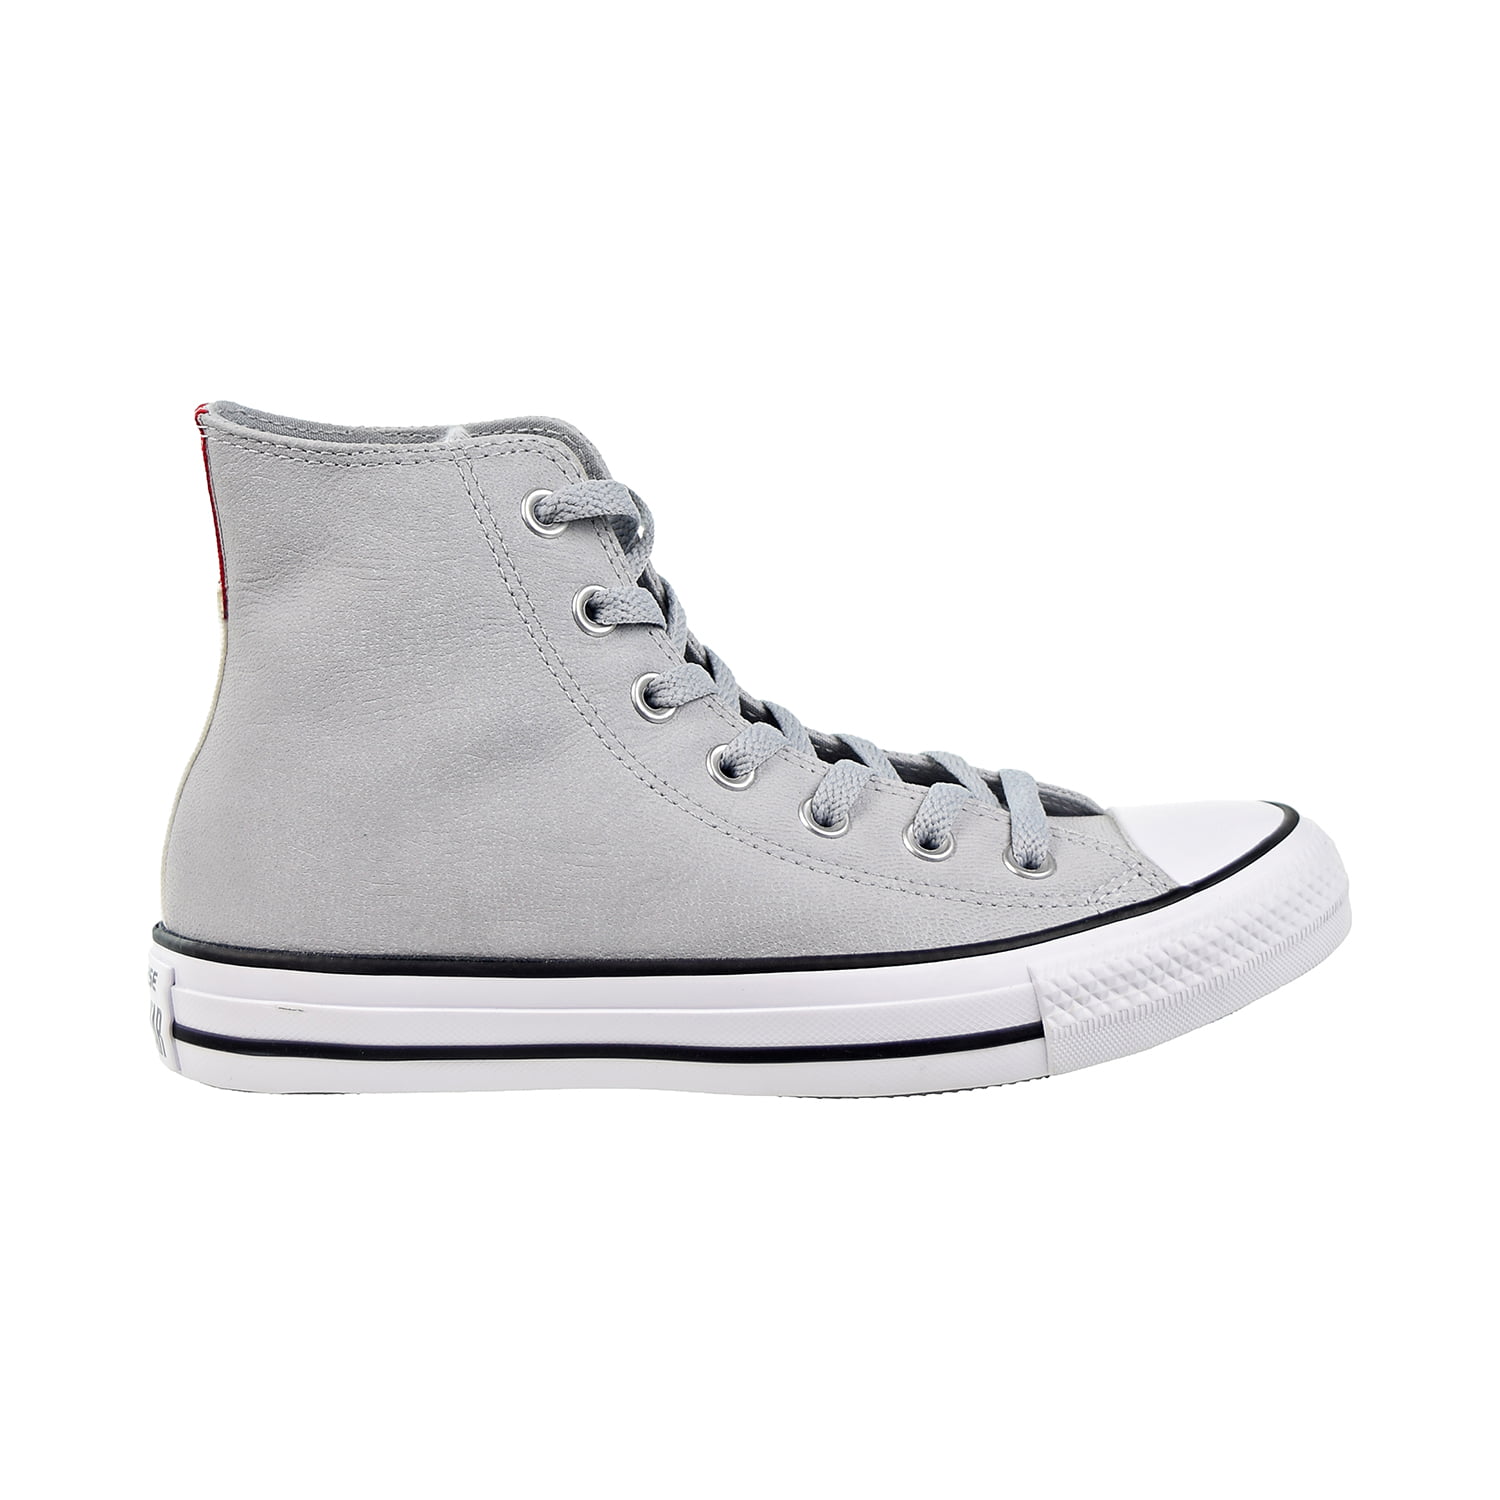 Converse Taylor All Hi Mens Shoes Wolf Grey-Black-White 159611c - Walmart.com